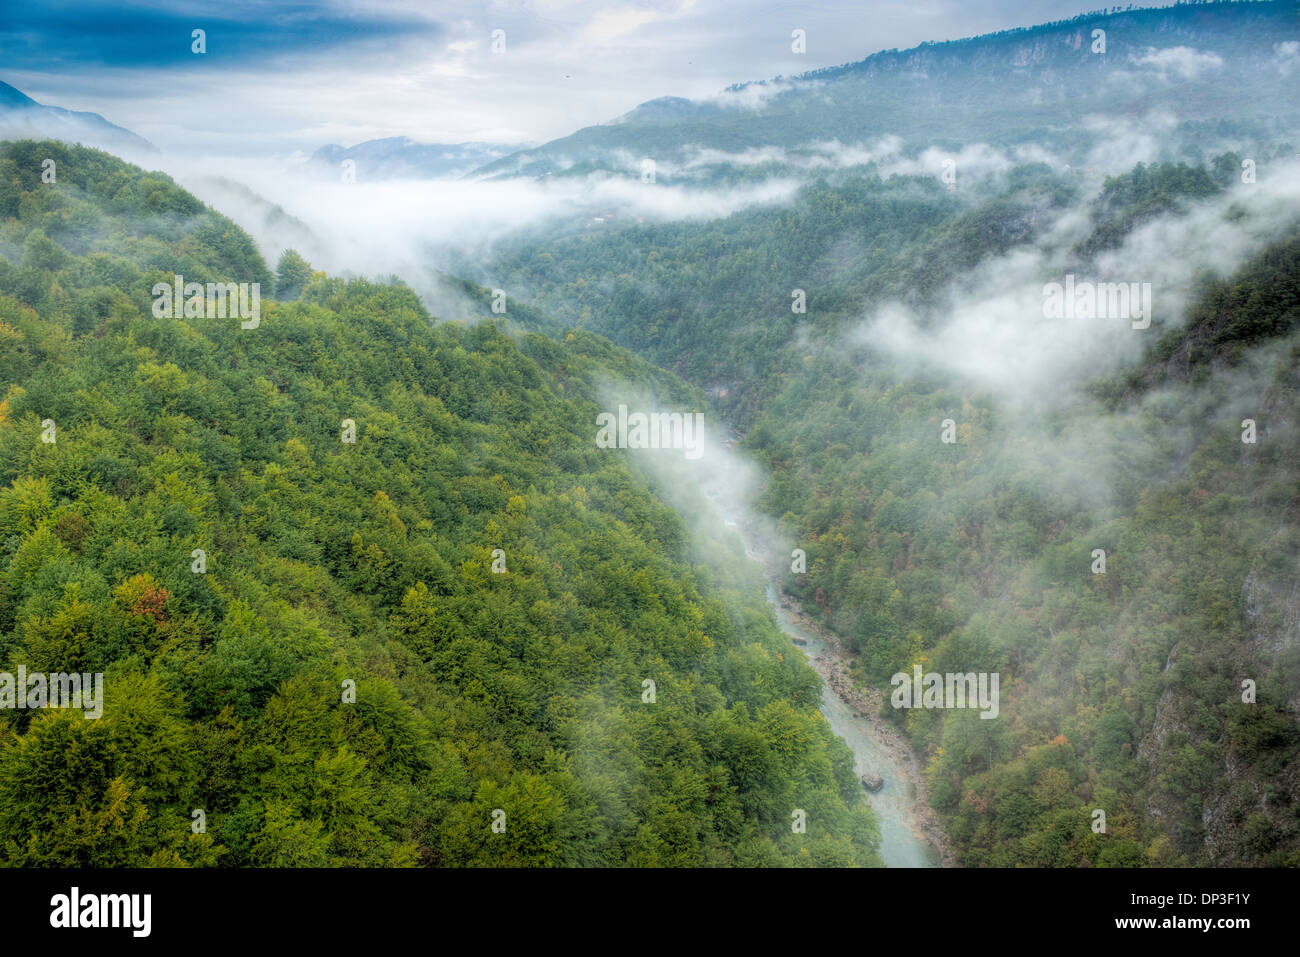 Tara Fluss-Schlucht, Montenegro, Deep River Canyon Piva Region tiefsten Canyon Europas Stockfoto